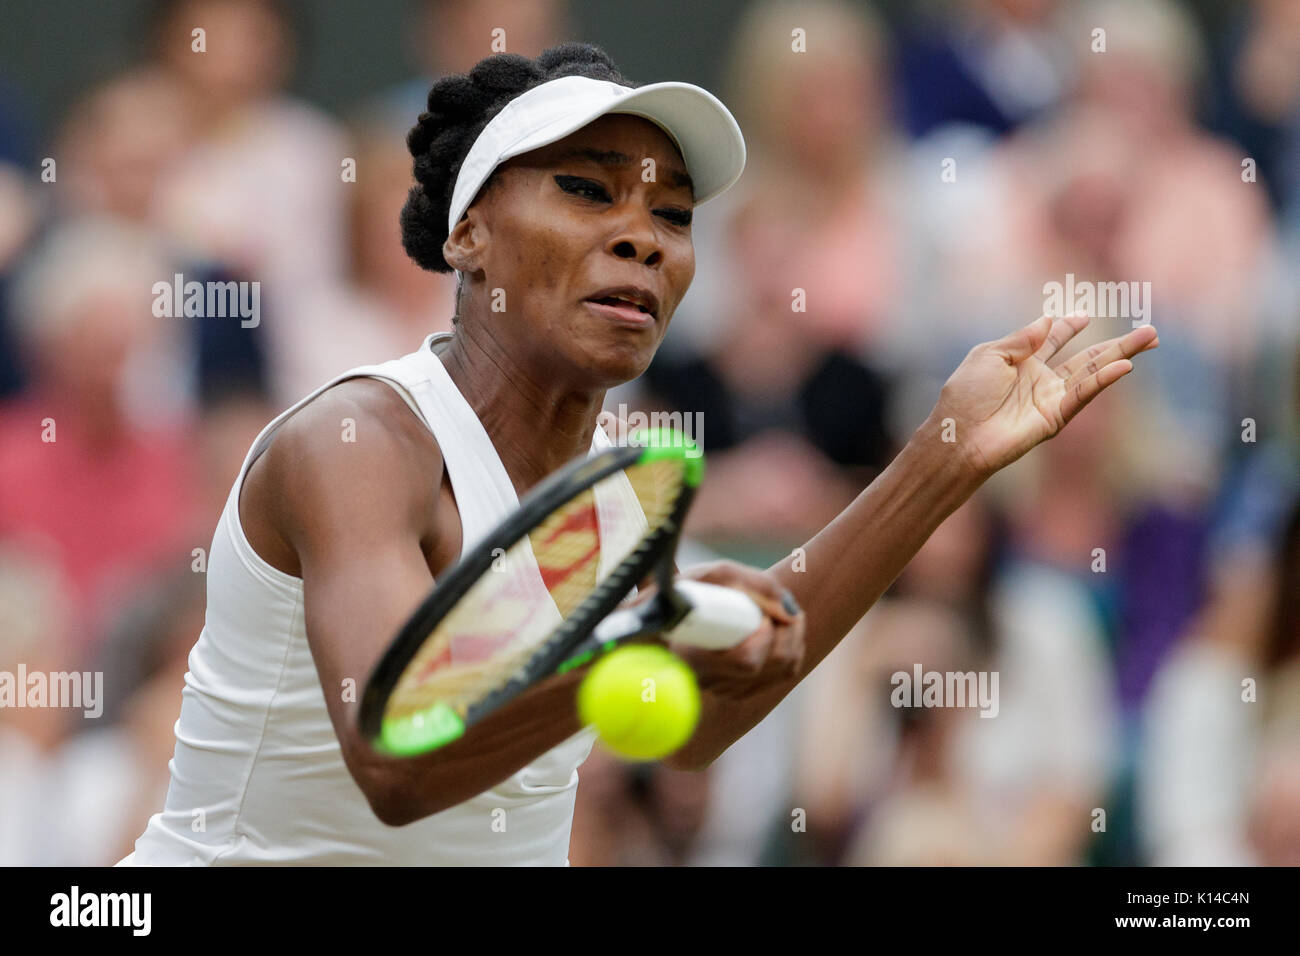 Venus Williams of the USA at the Wimbledon Championships 2017 Stock Photo